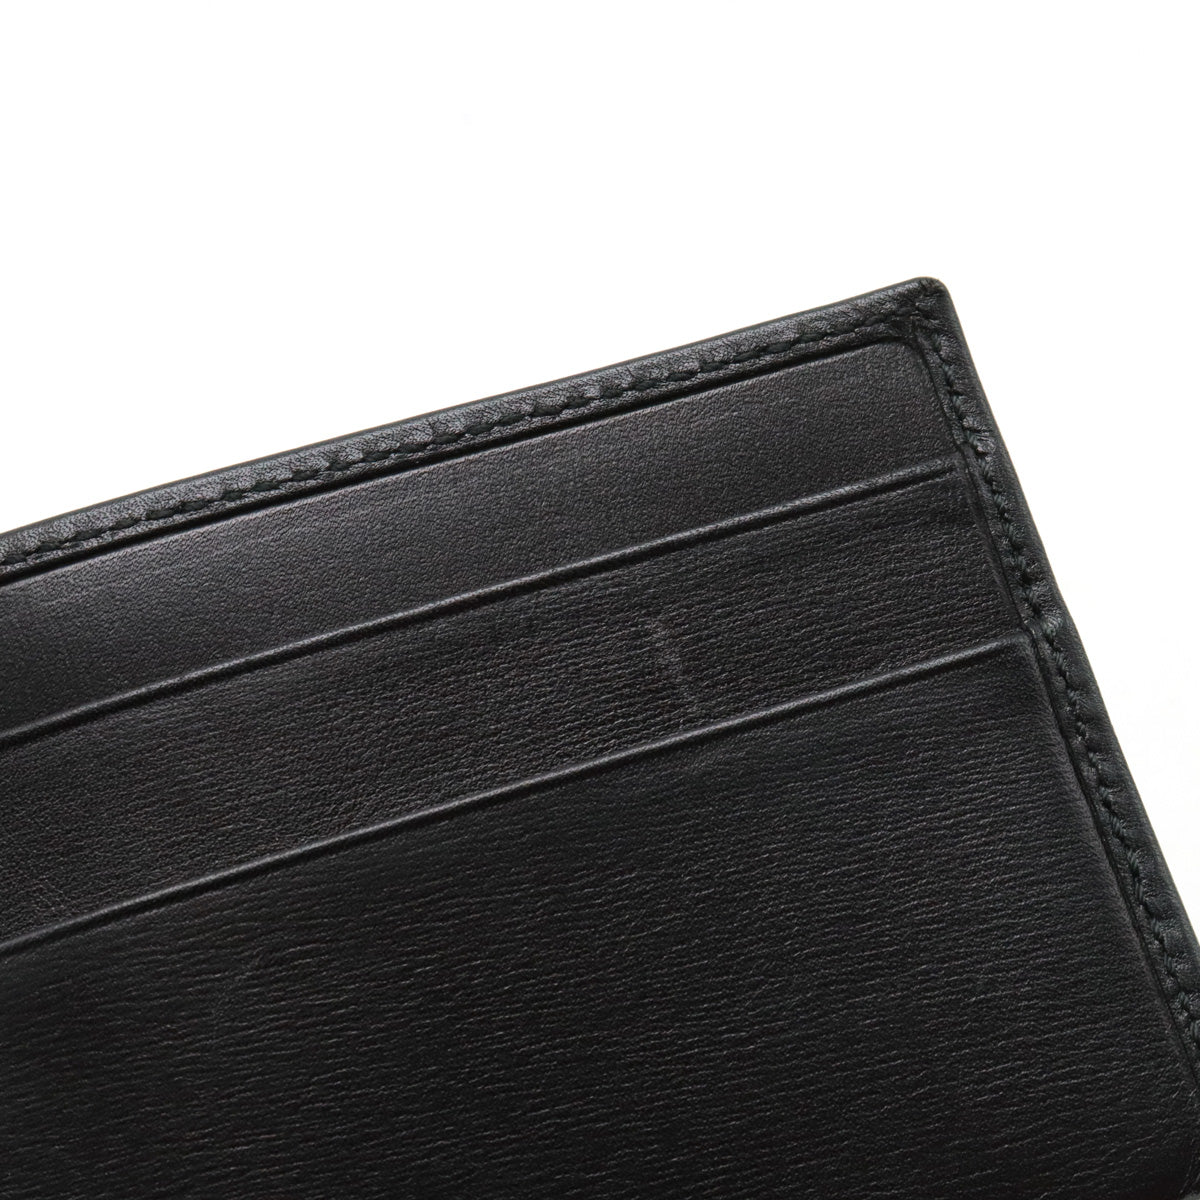 Gucci Wallet 2 Folded Wallet 2 Folded Wallet Money Clip Bill Clip Card Folded Men's Leather Black Black Silver Silver  04805